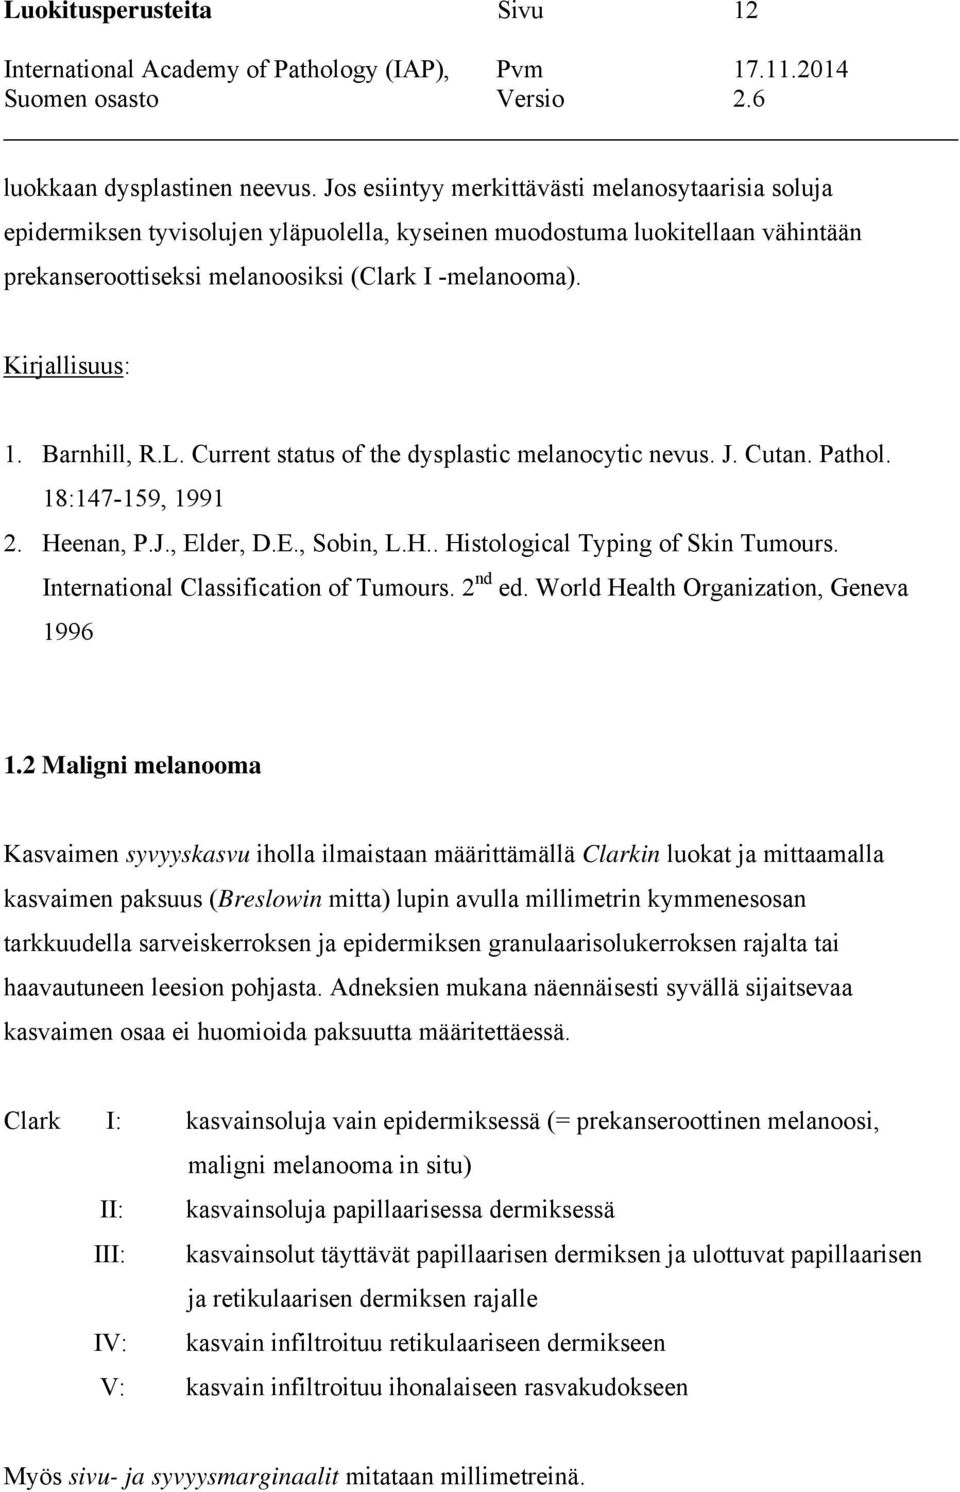 Kirjallisuus: 1. Barnhill, R.L. Current status of the dysplastic melanocytic nevus. J. Cutan. Pathol. 18:147-159, 1991 2. Heenan, P.J., Elder, D.E., Sobin, L.H.. Histological Typing of Skin Tumours.